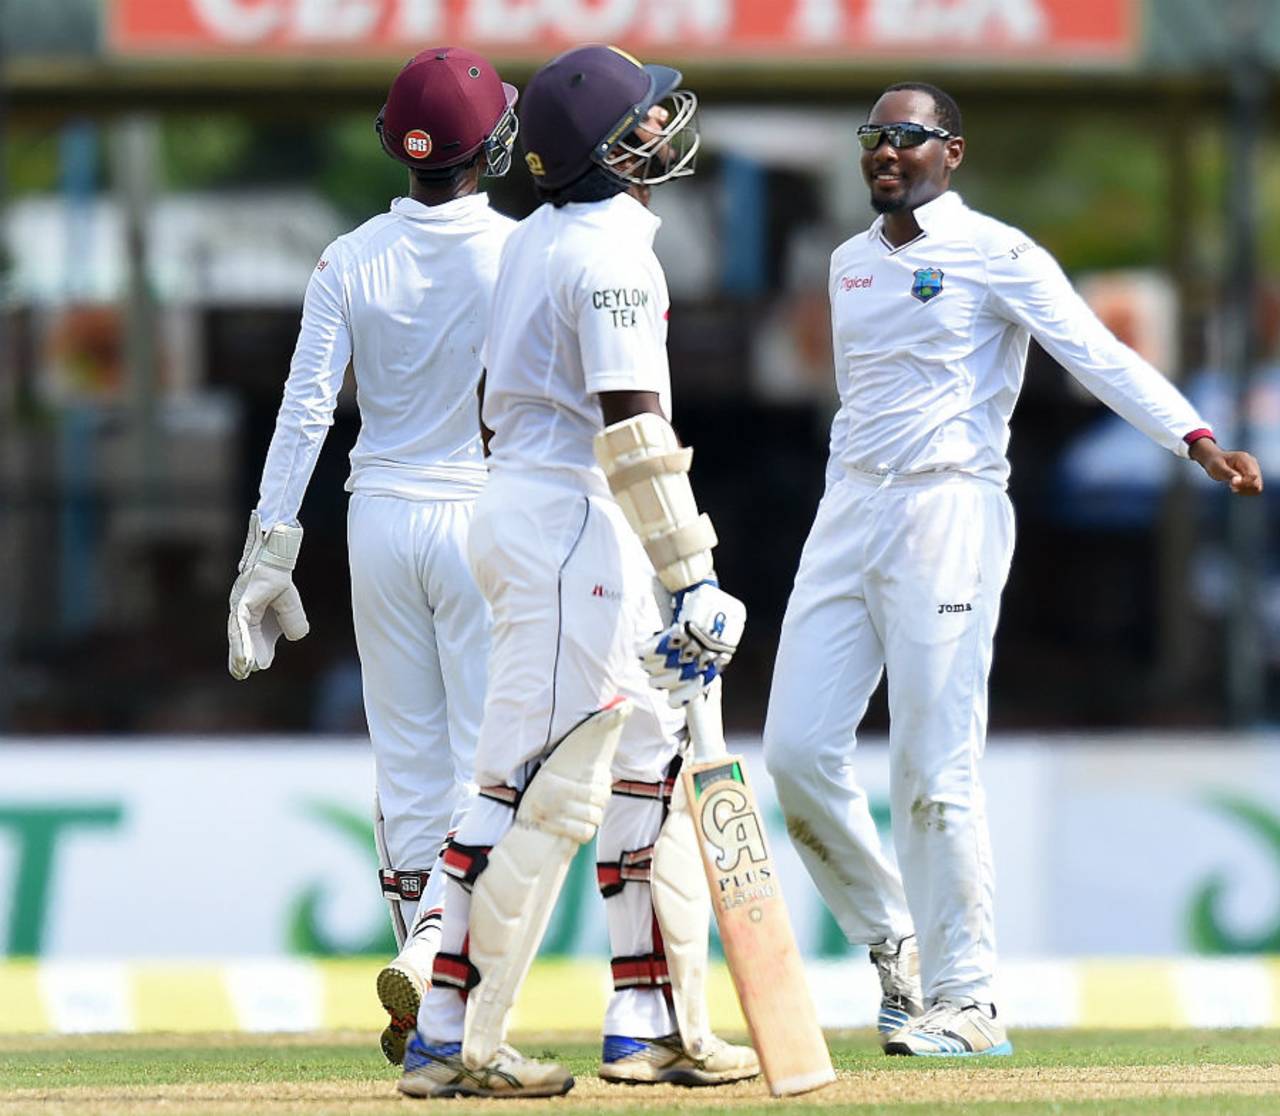 Jomel Warrican celebrates the wicket of Kusal Perera, Sri Lanka v West Indies, 2nd Test, Colombo, 1st day, October 22, 2015